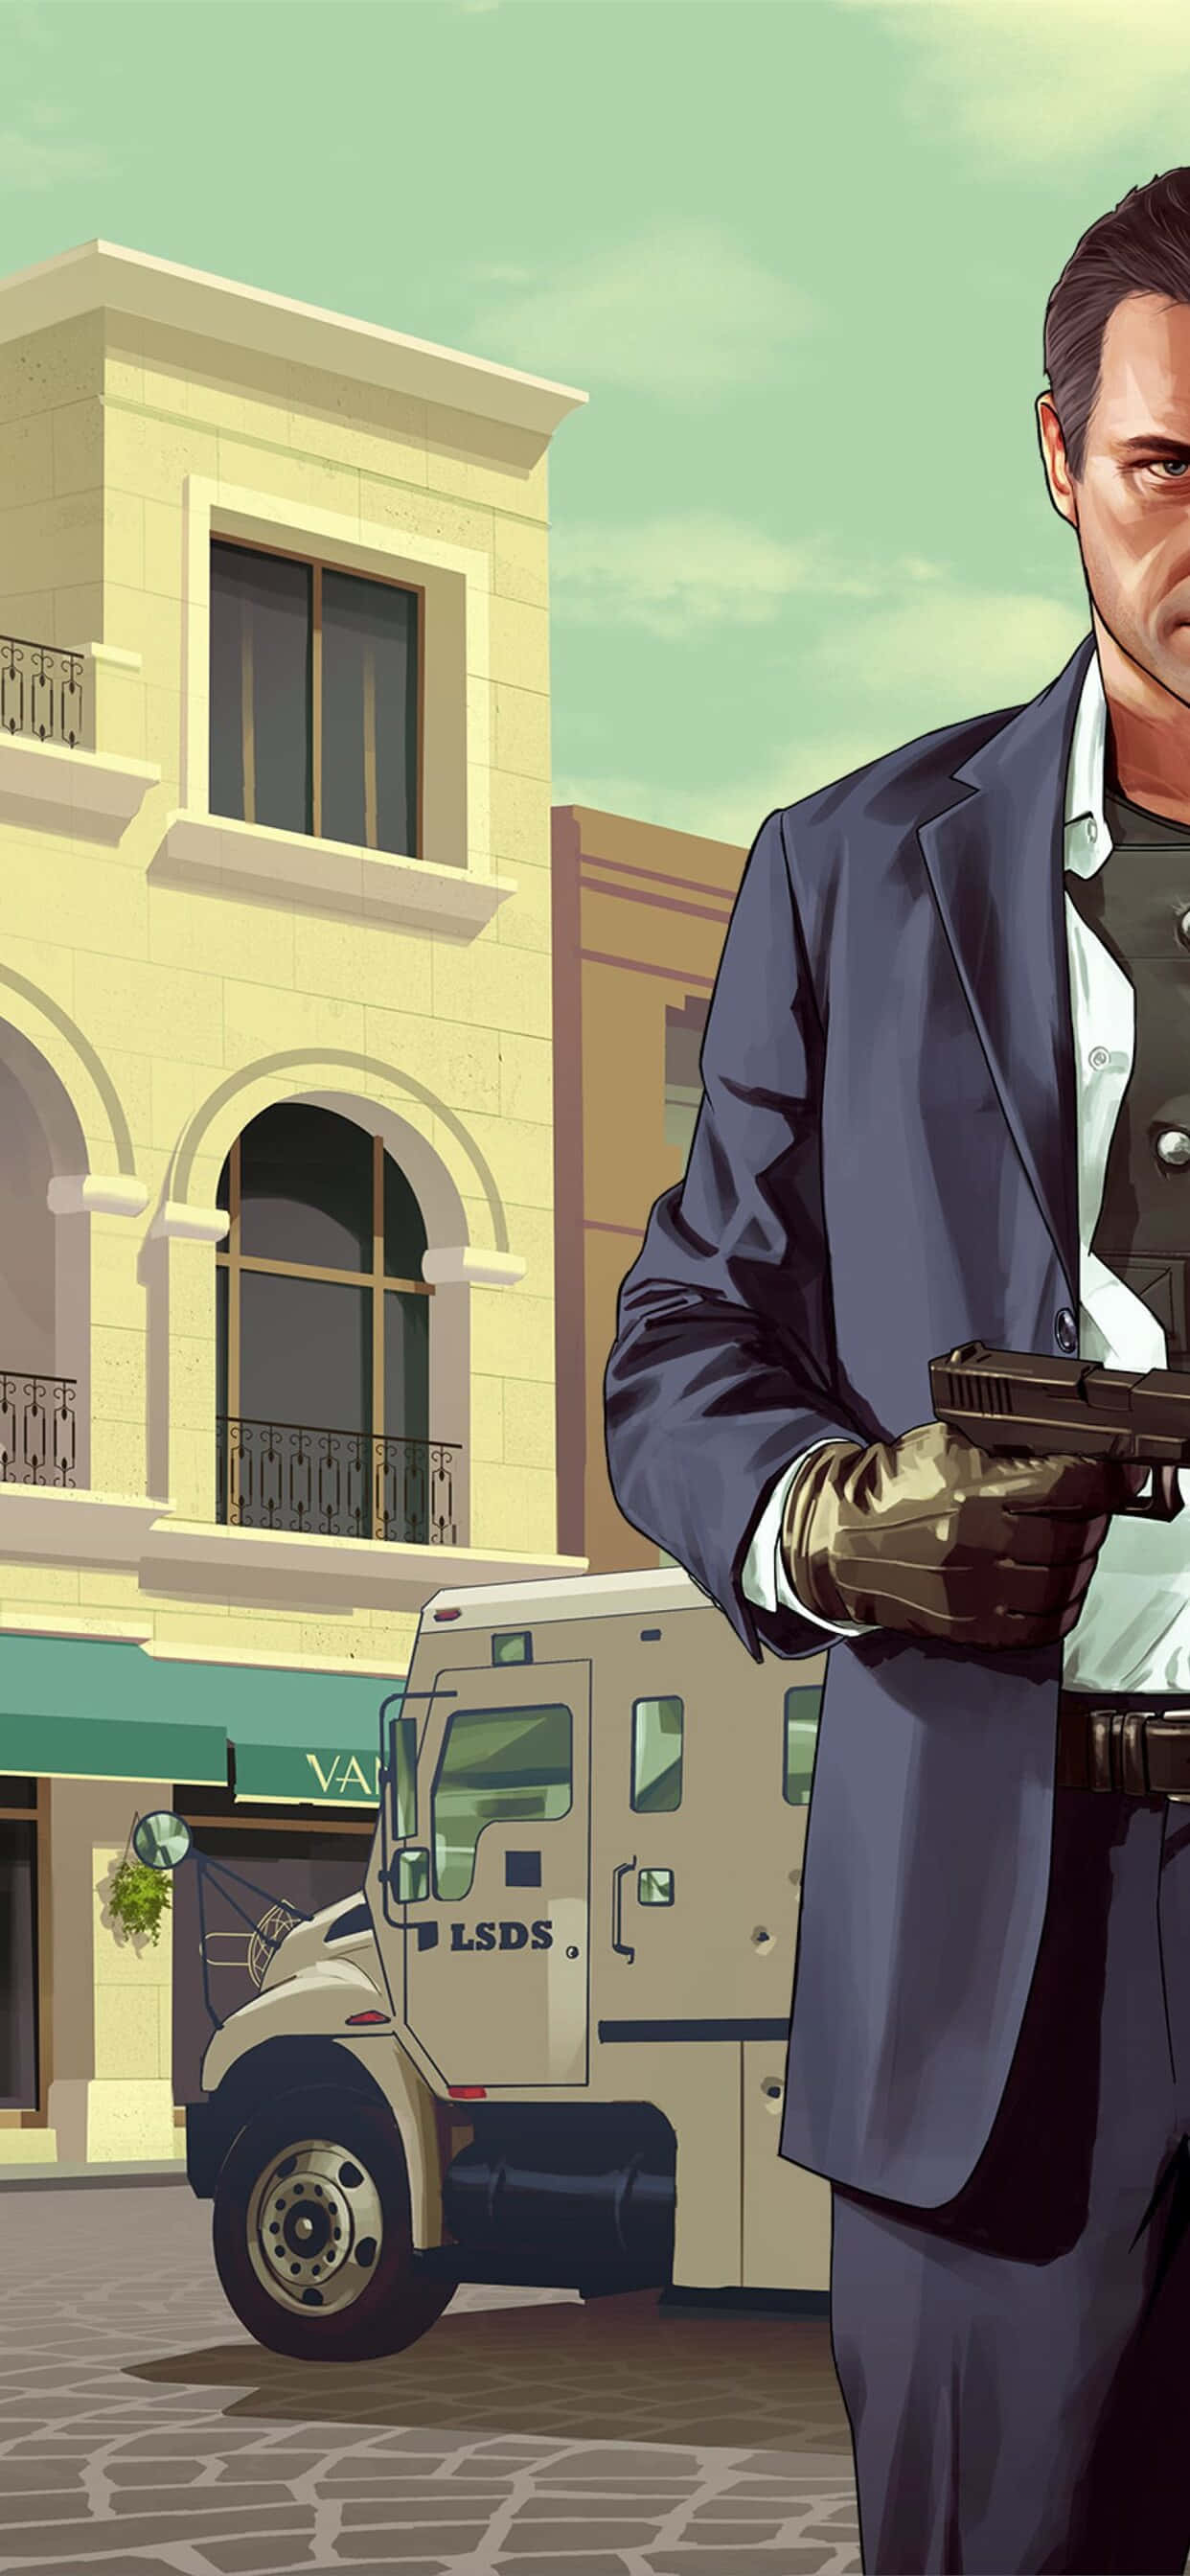 Fondode Pantalla De Grand Theft Auto V Para Iphone Xs Max: Ladrón Con Traje.